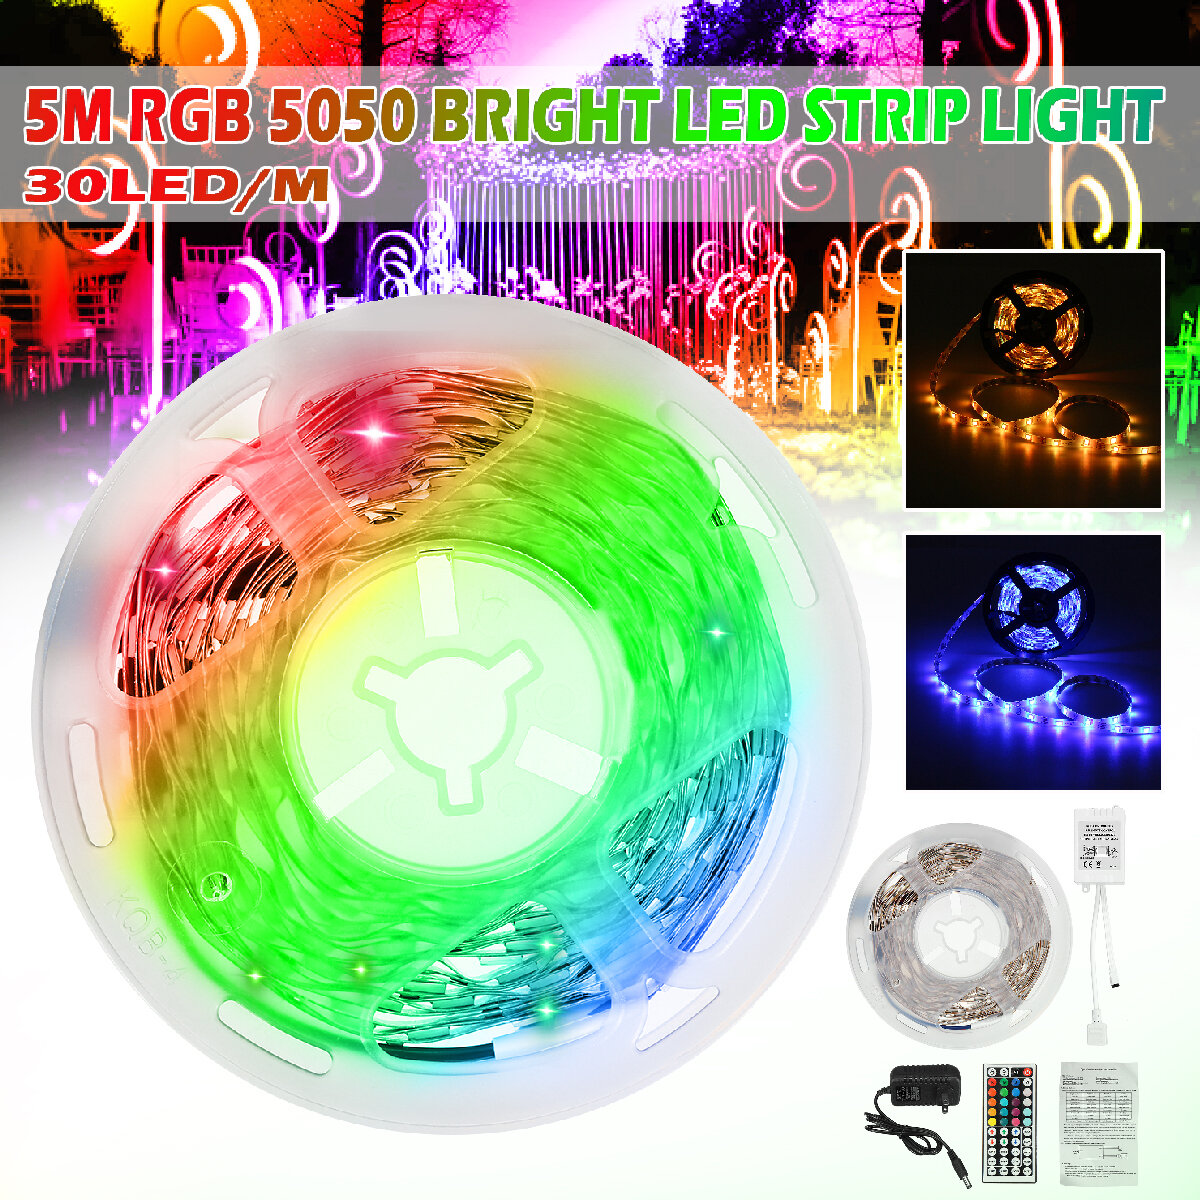 5M RGB 5050 NIET waterdichte LED Strip Light SMD met 44 Key Remote Controller